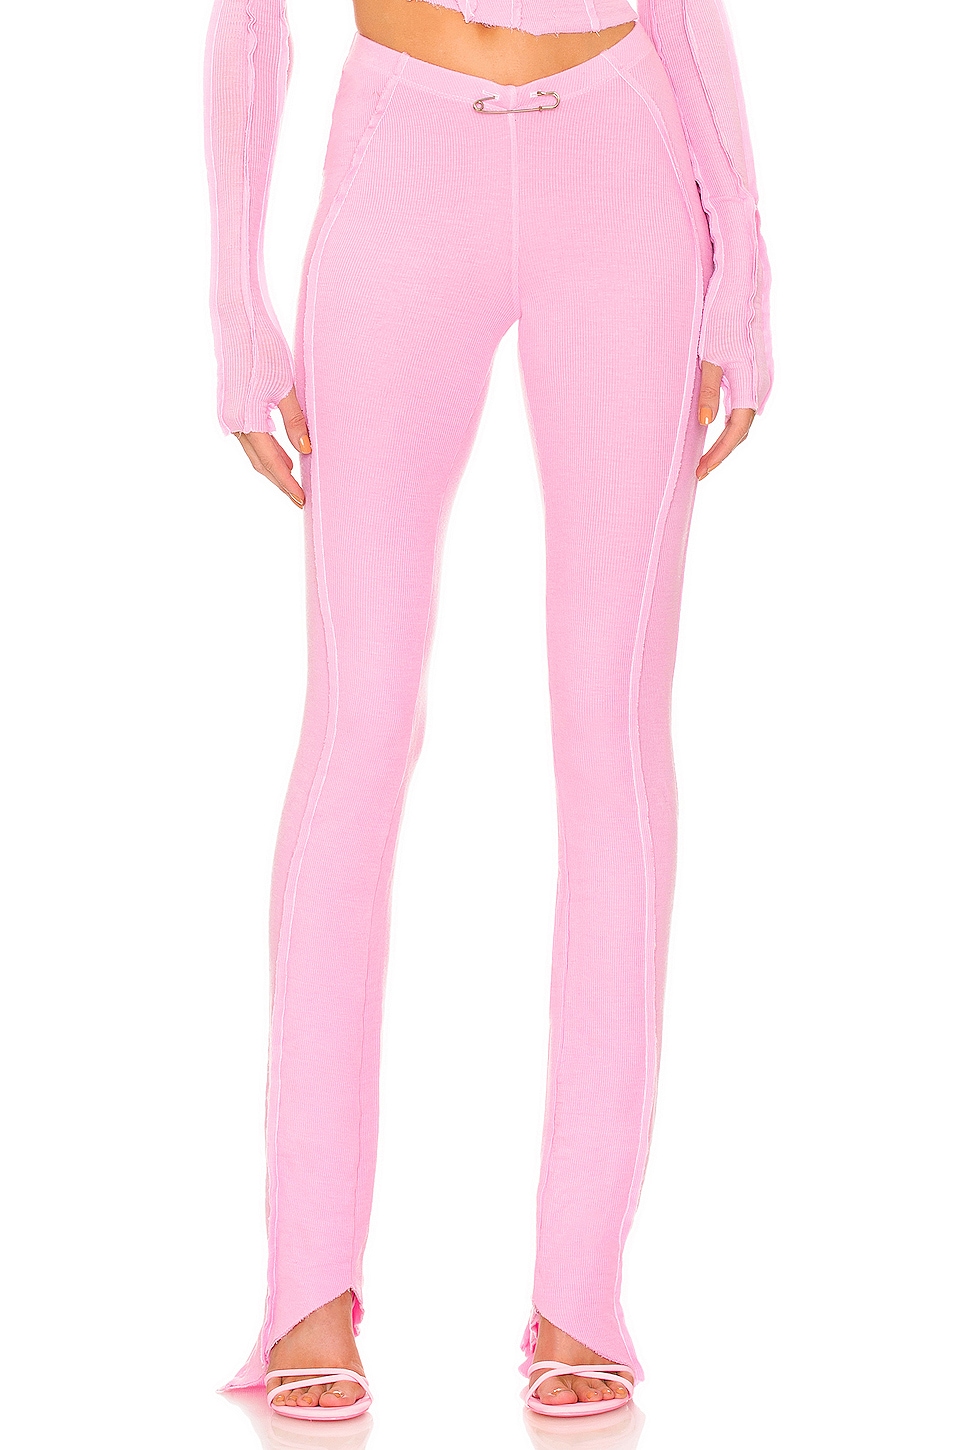 SAMI MIRO VINTAGE Asymmetric Pants in Pink | REVOLVE